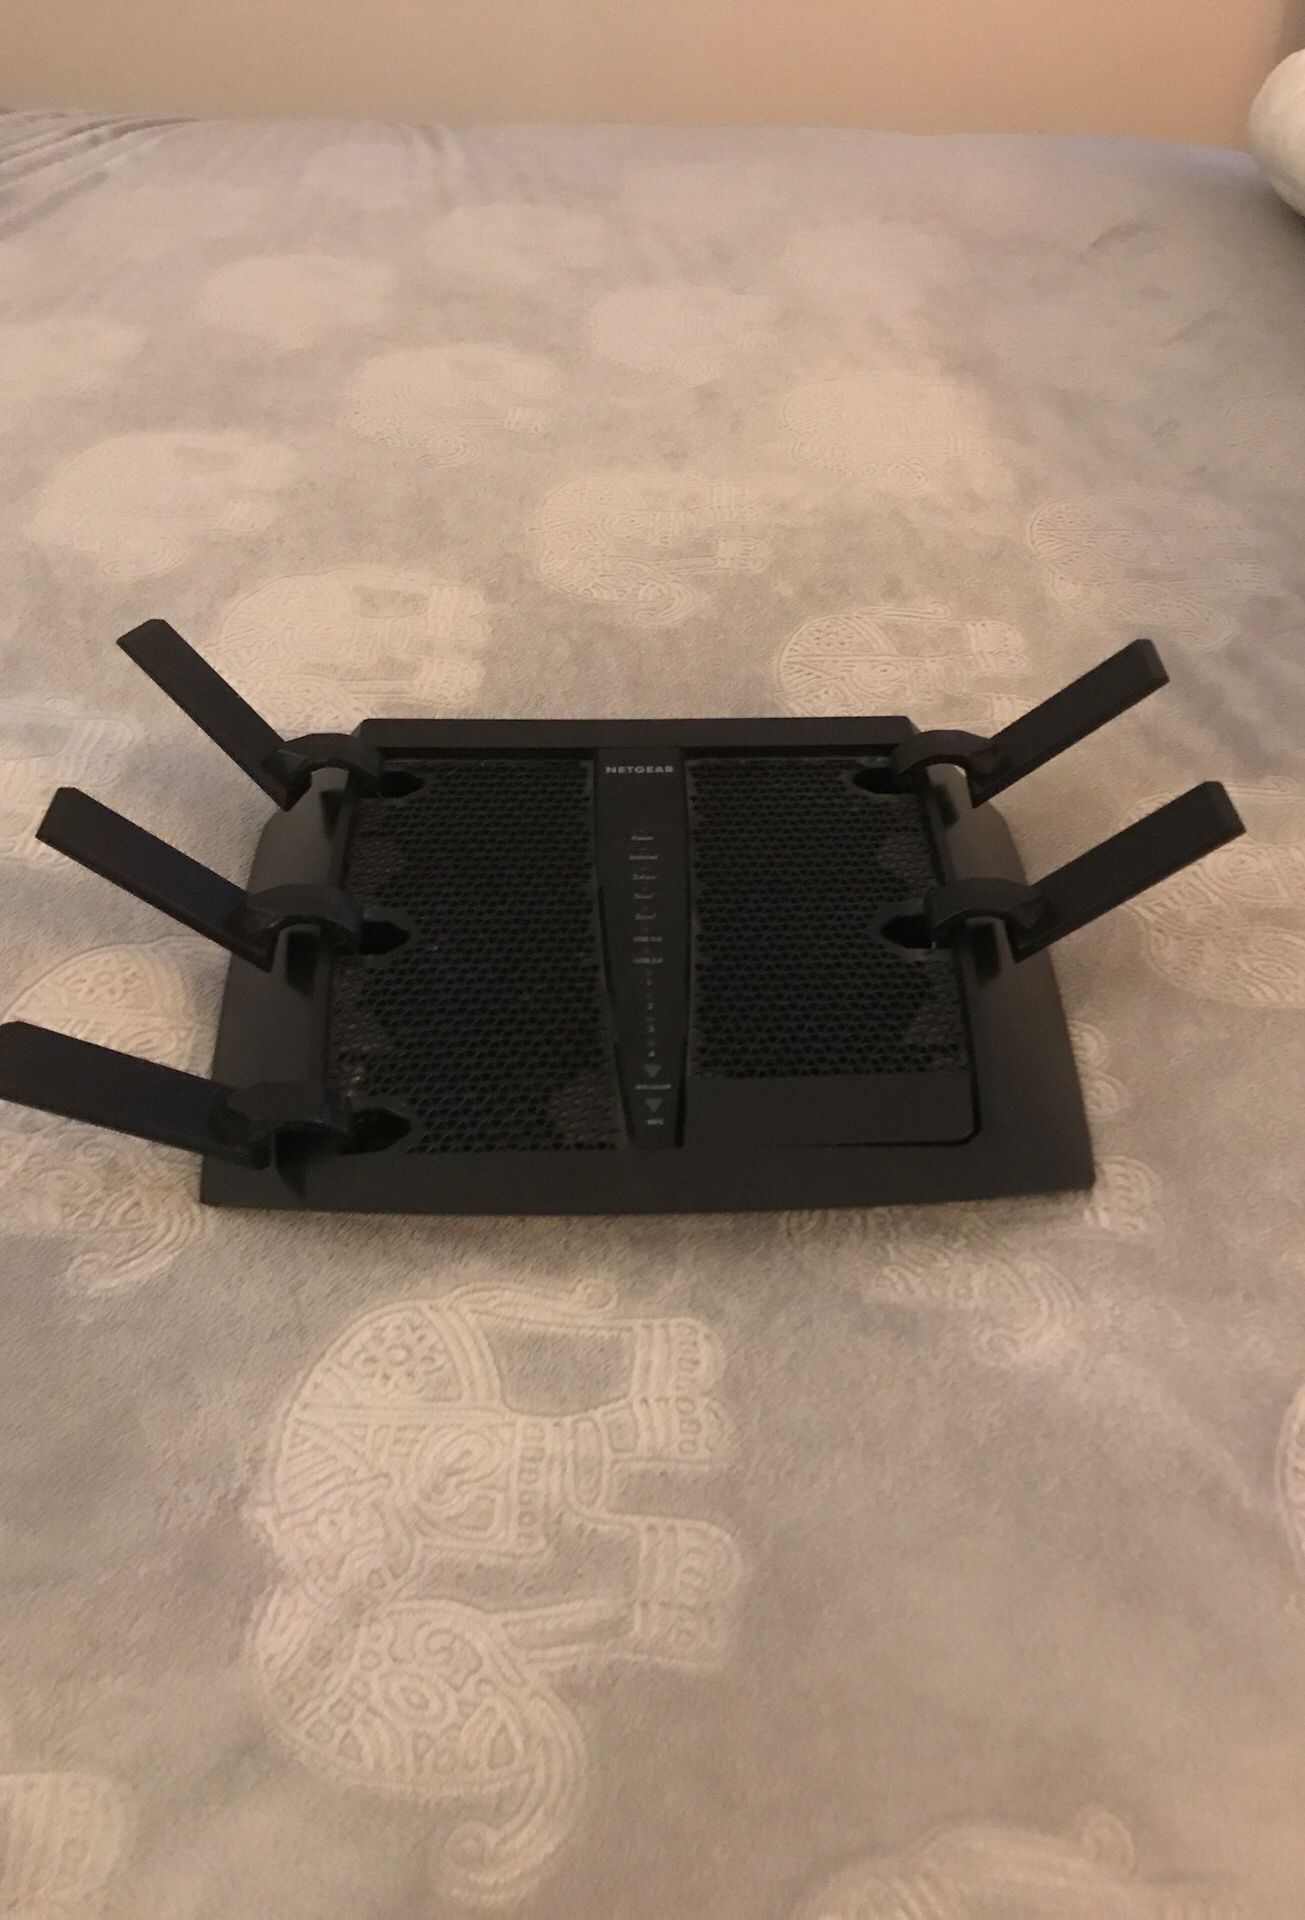 NETGEAR (R8000-100NAS) Nighthawk X6 AC3200 Tri-Band WiFi Router, Gigabit Ethernet, Compatible with Amazon Echo/Alexa